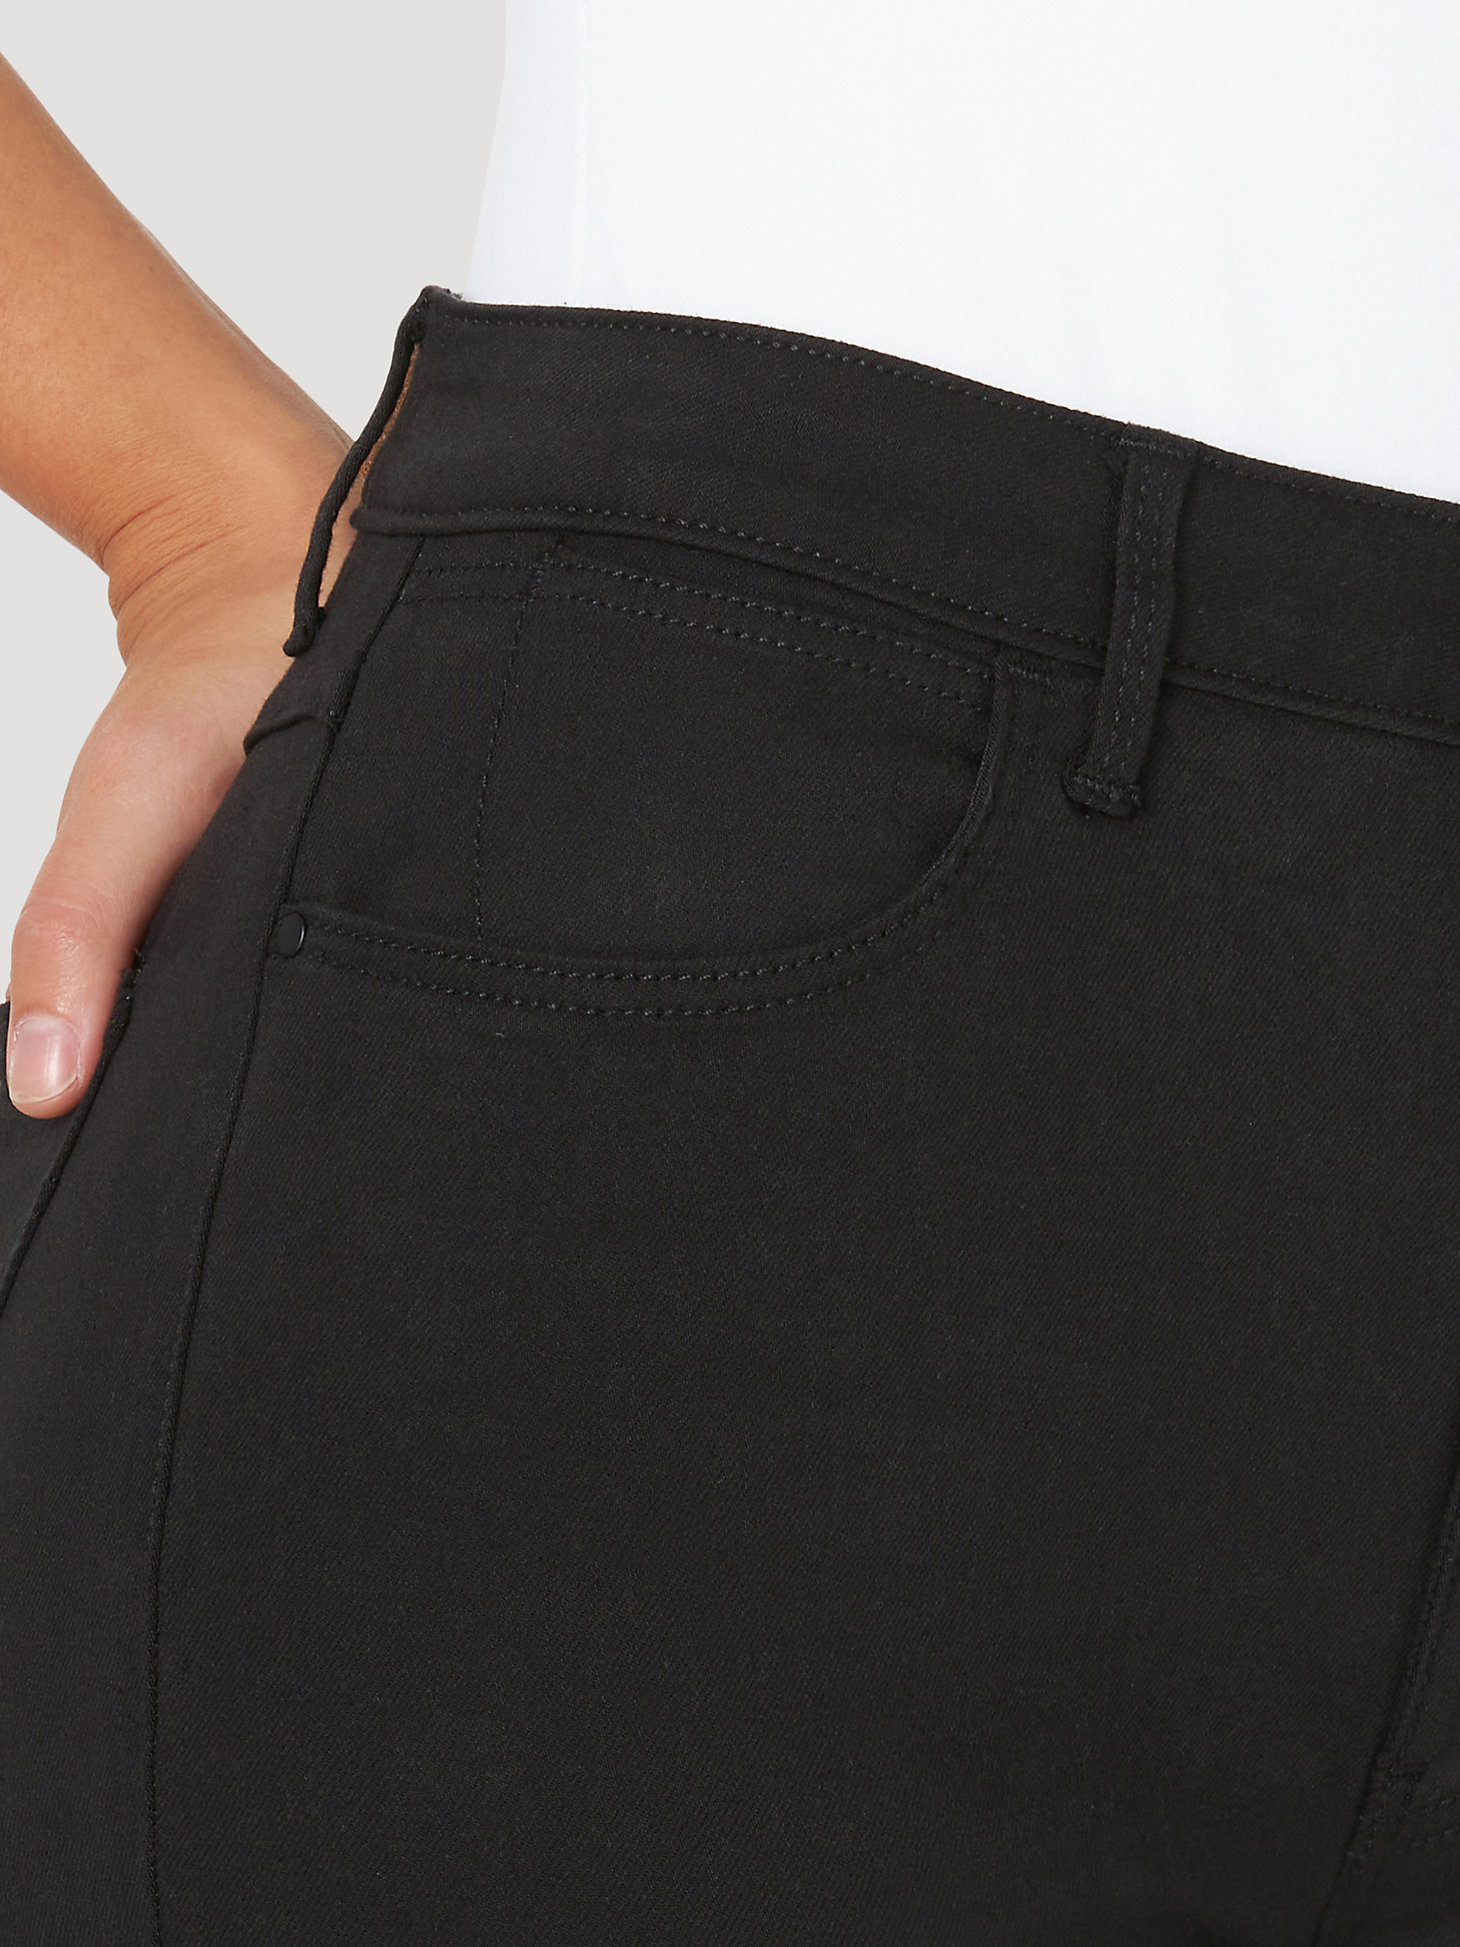 Women's Wrangler® High Rise Unforgettable Skinny Jeans in Black alternative view 5